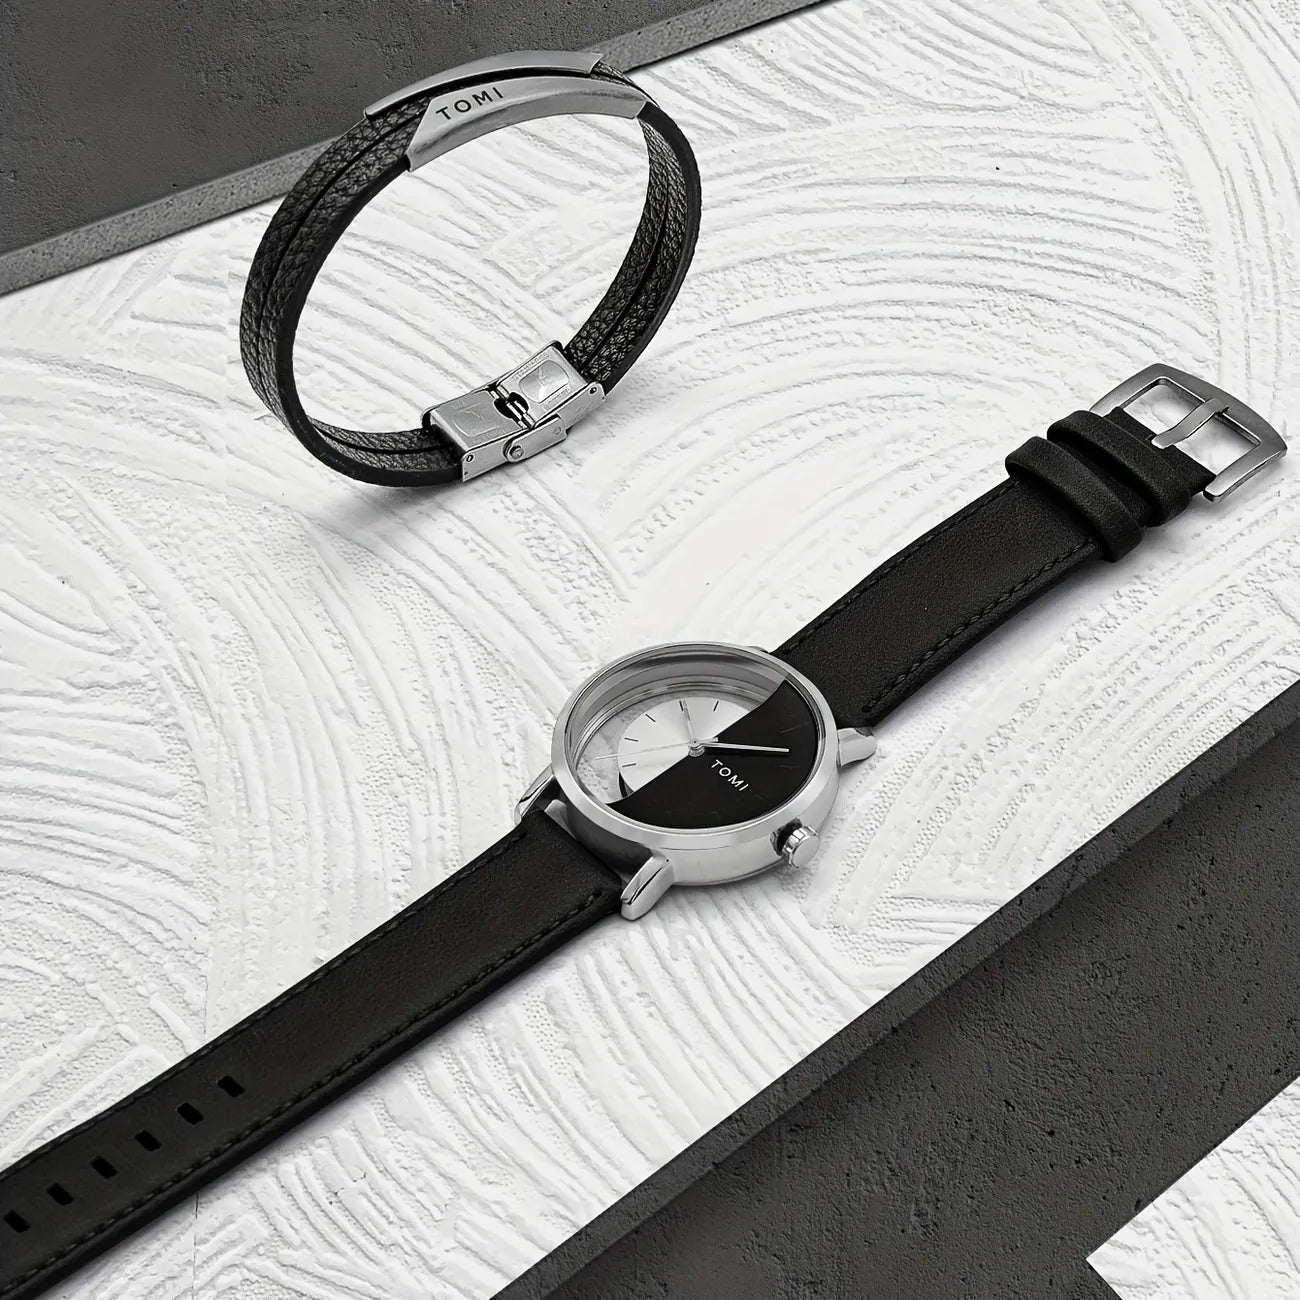 TOMI T-080 Unisex Watch With Bracelet